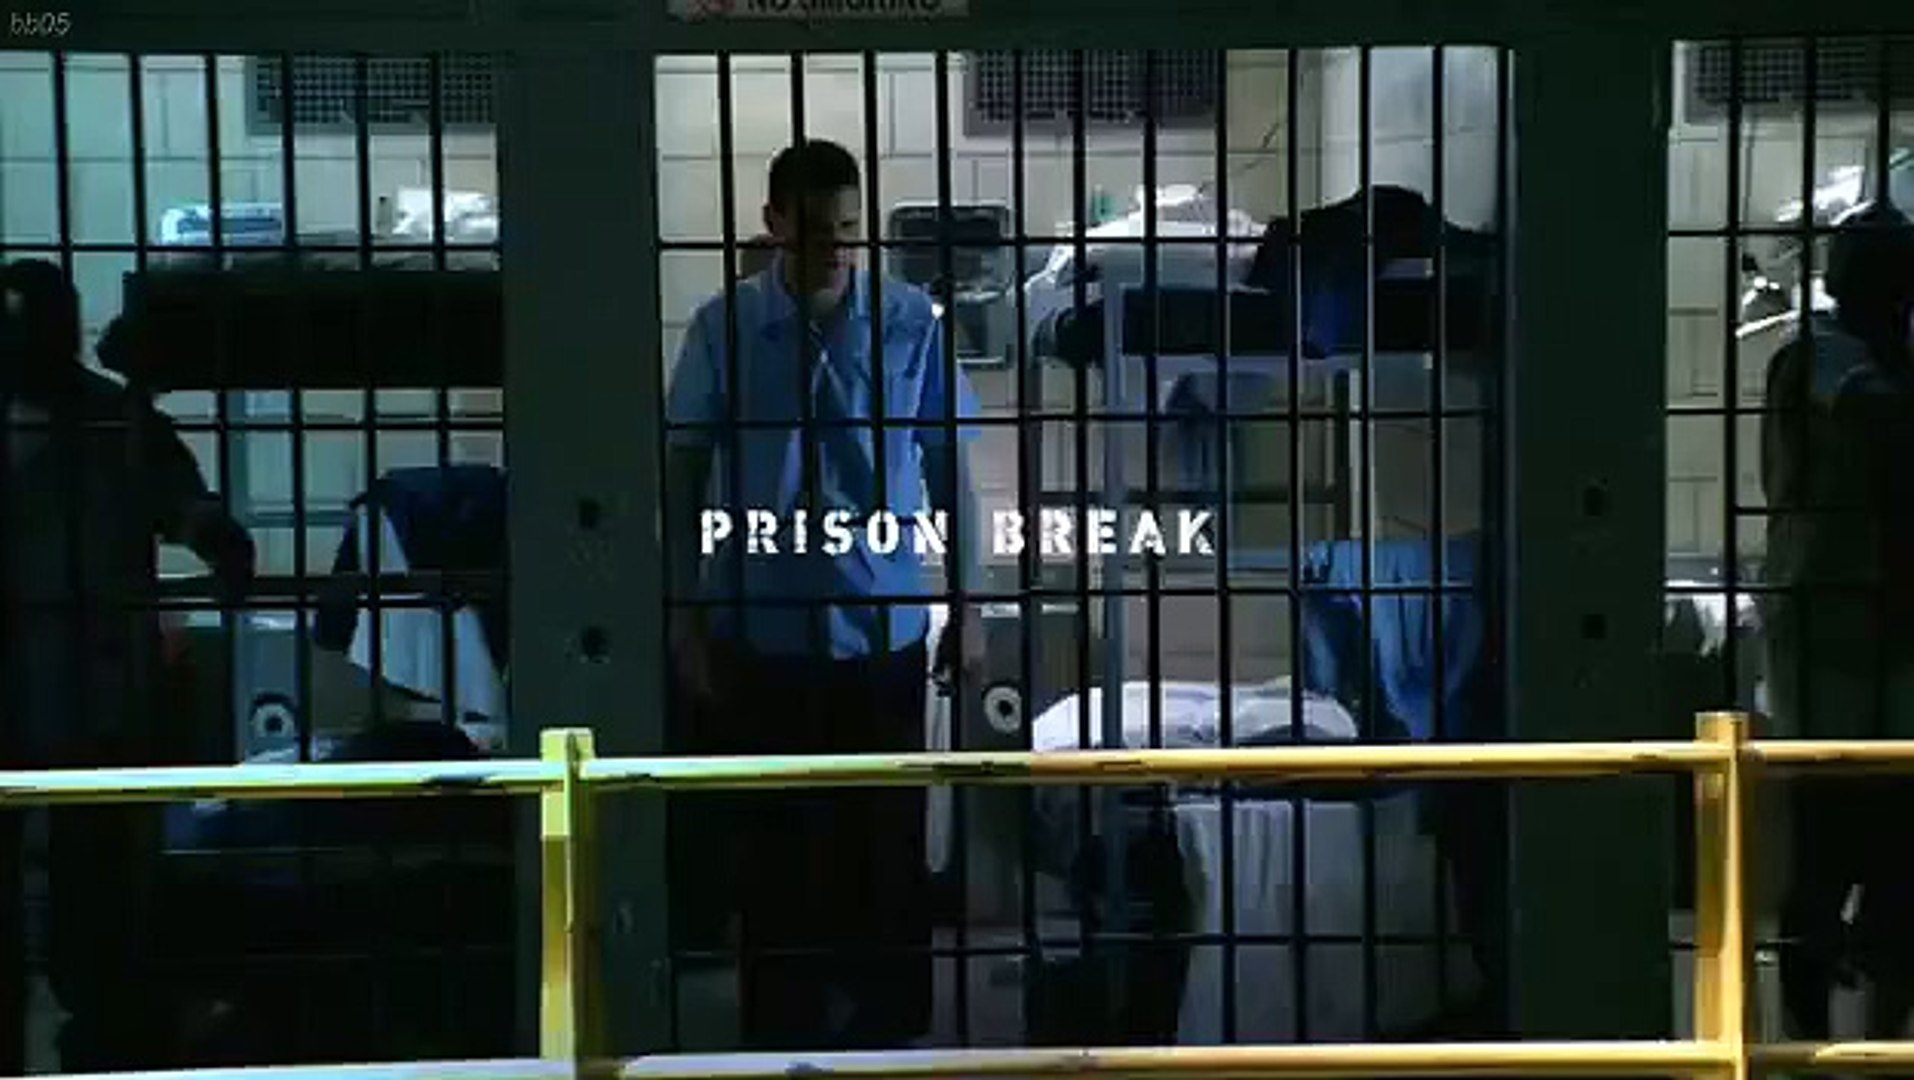 Prison break season 5 torrent download